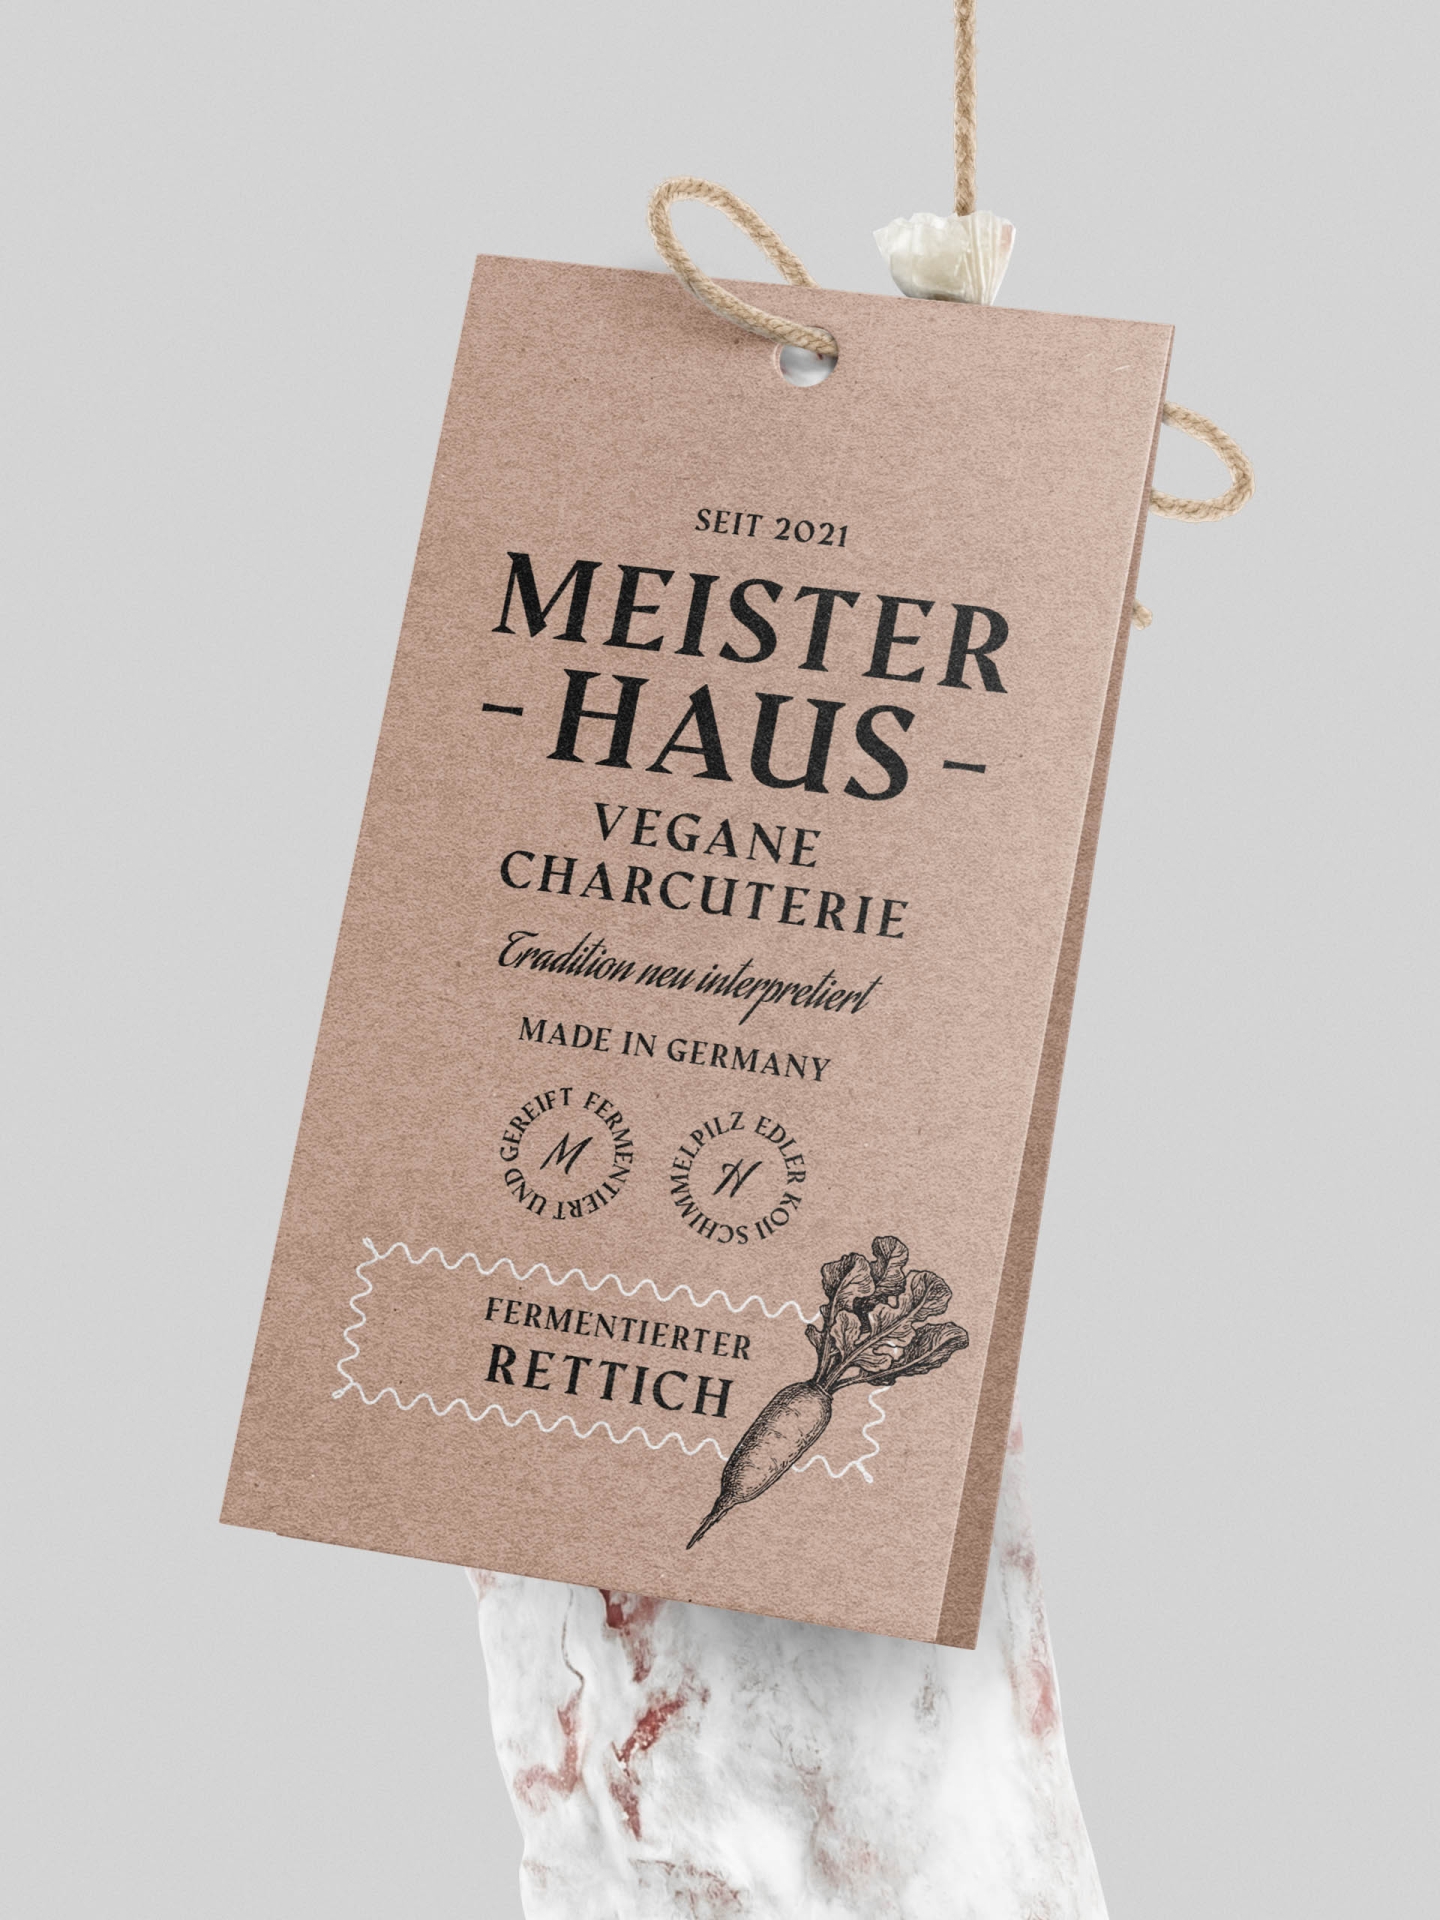 vegane Charcuterie "Meisterhaus"